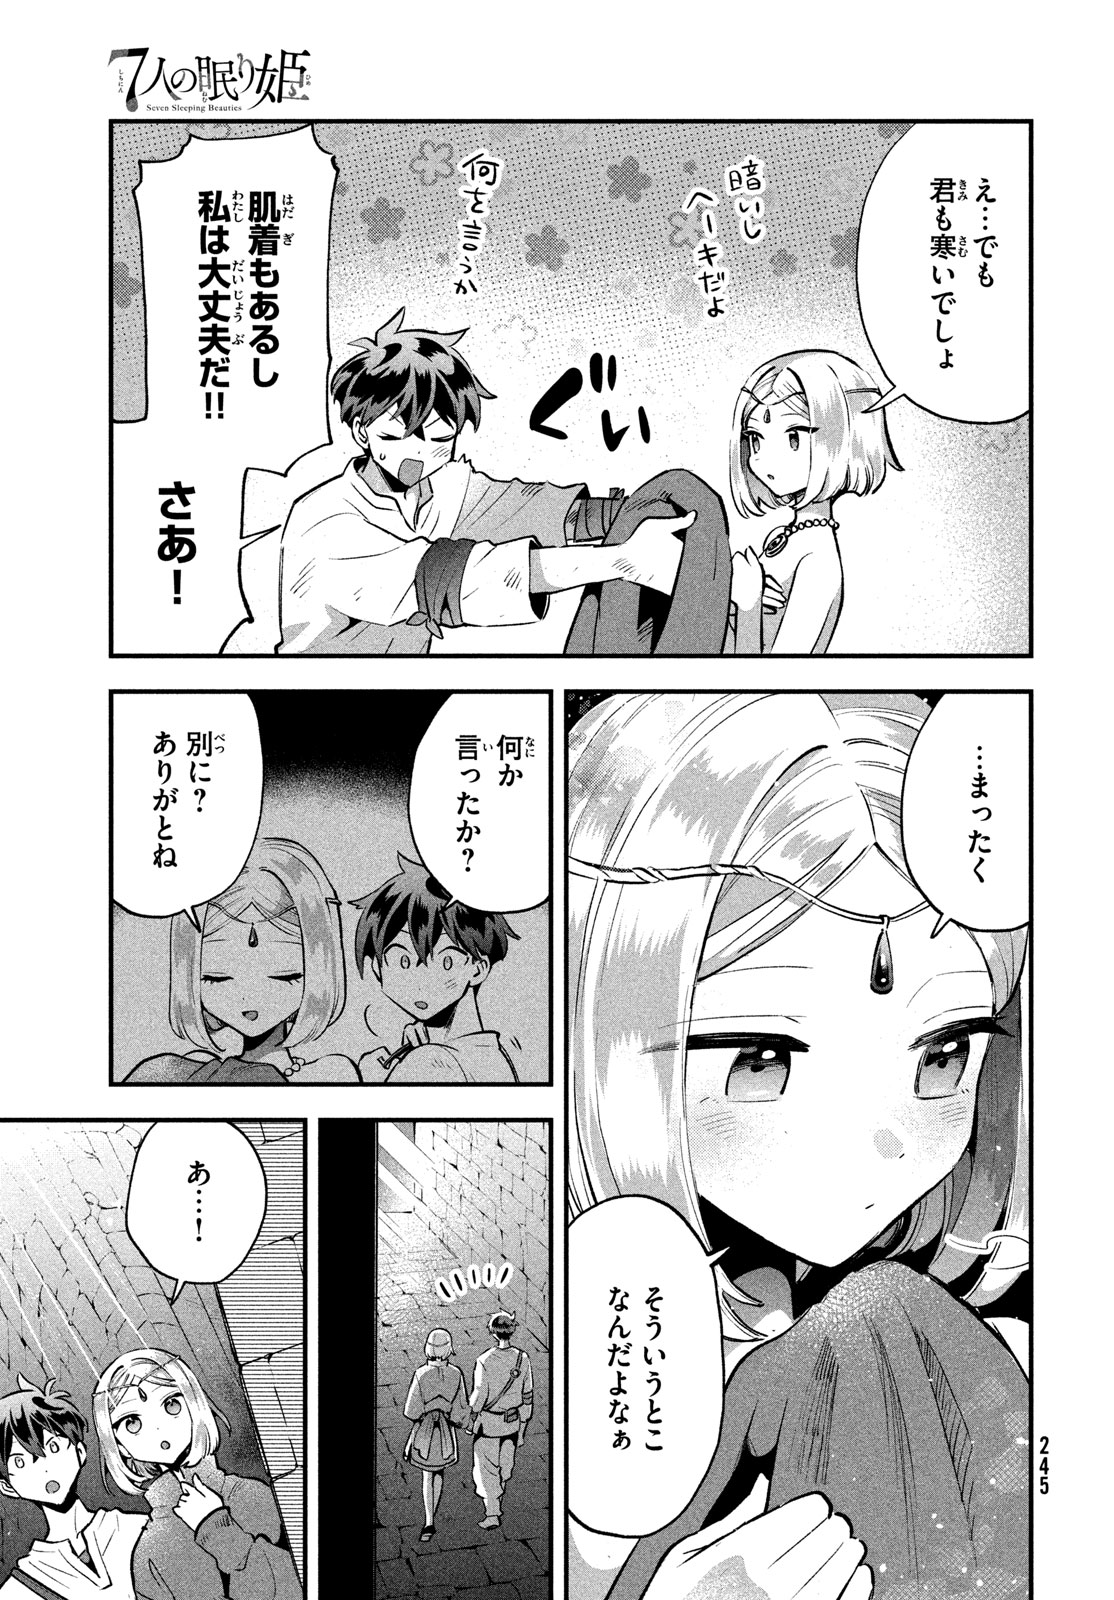 7-nin no Nemuri Hime - Chapter 37 - Page 13